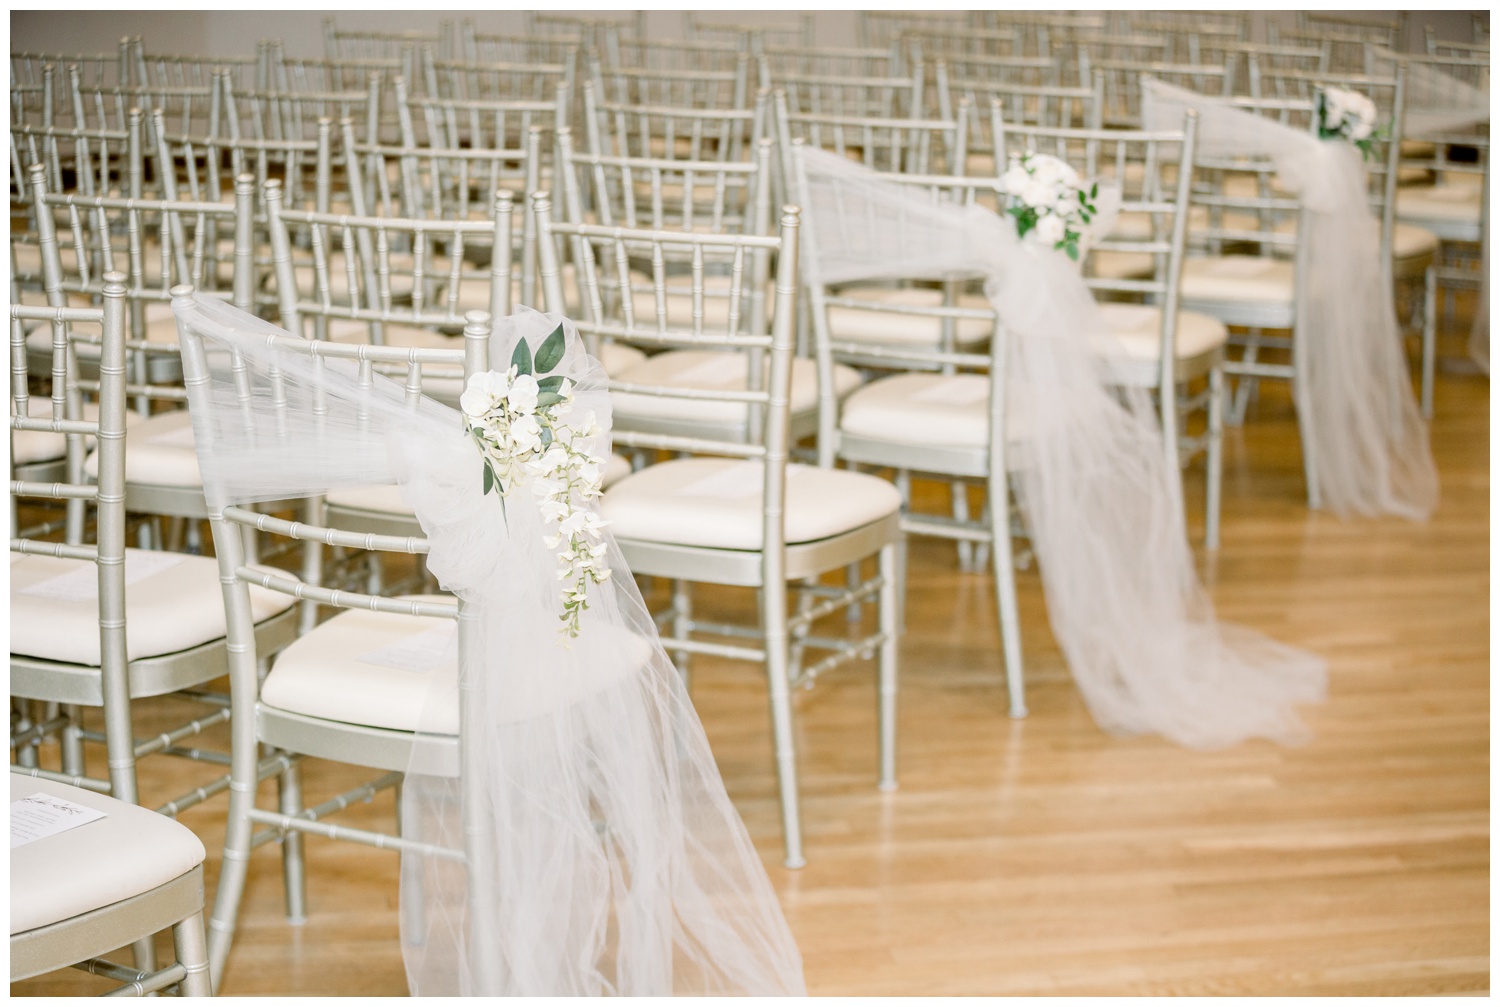 Wedding Ceremony Chairs at The Center Cincinnati